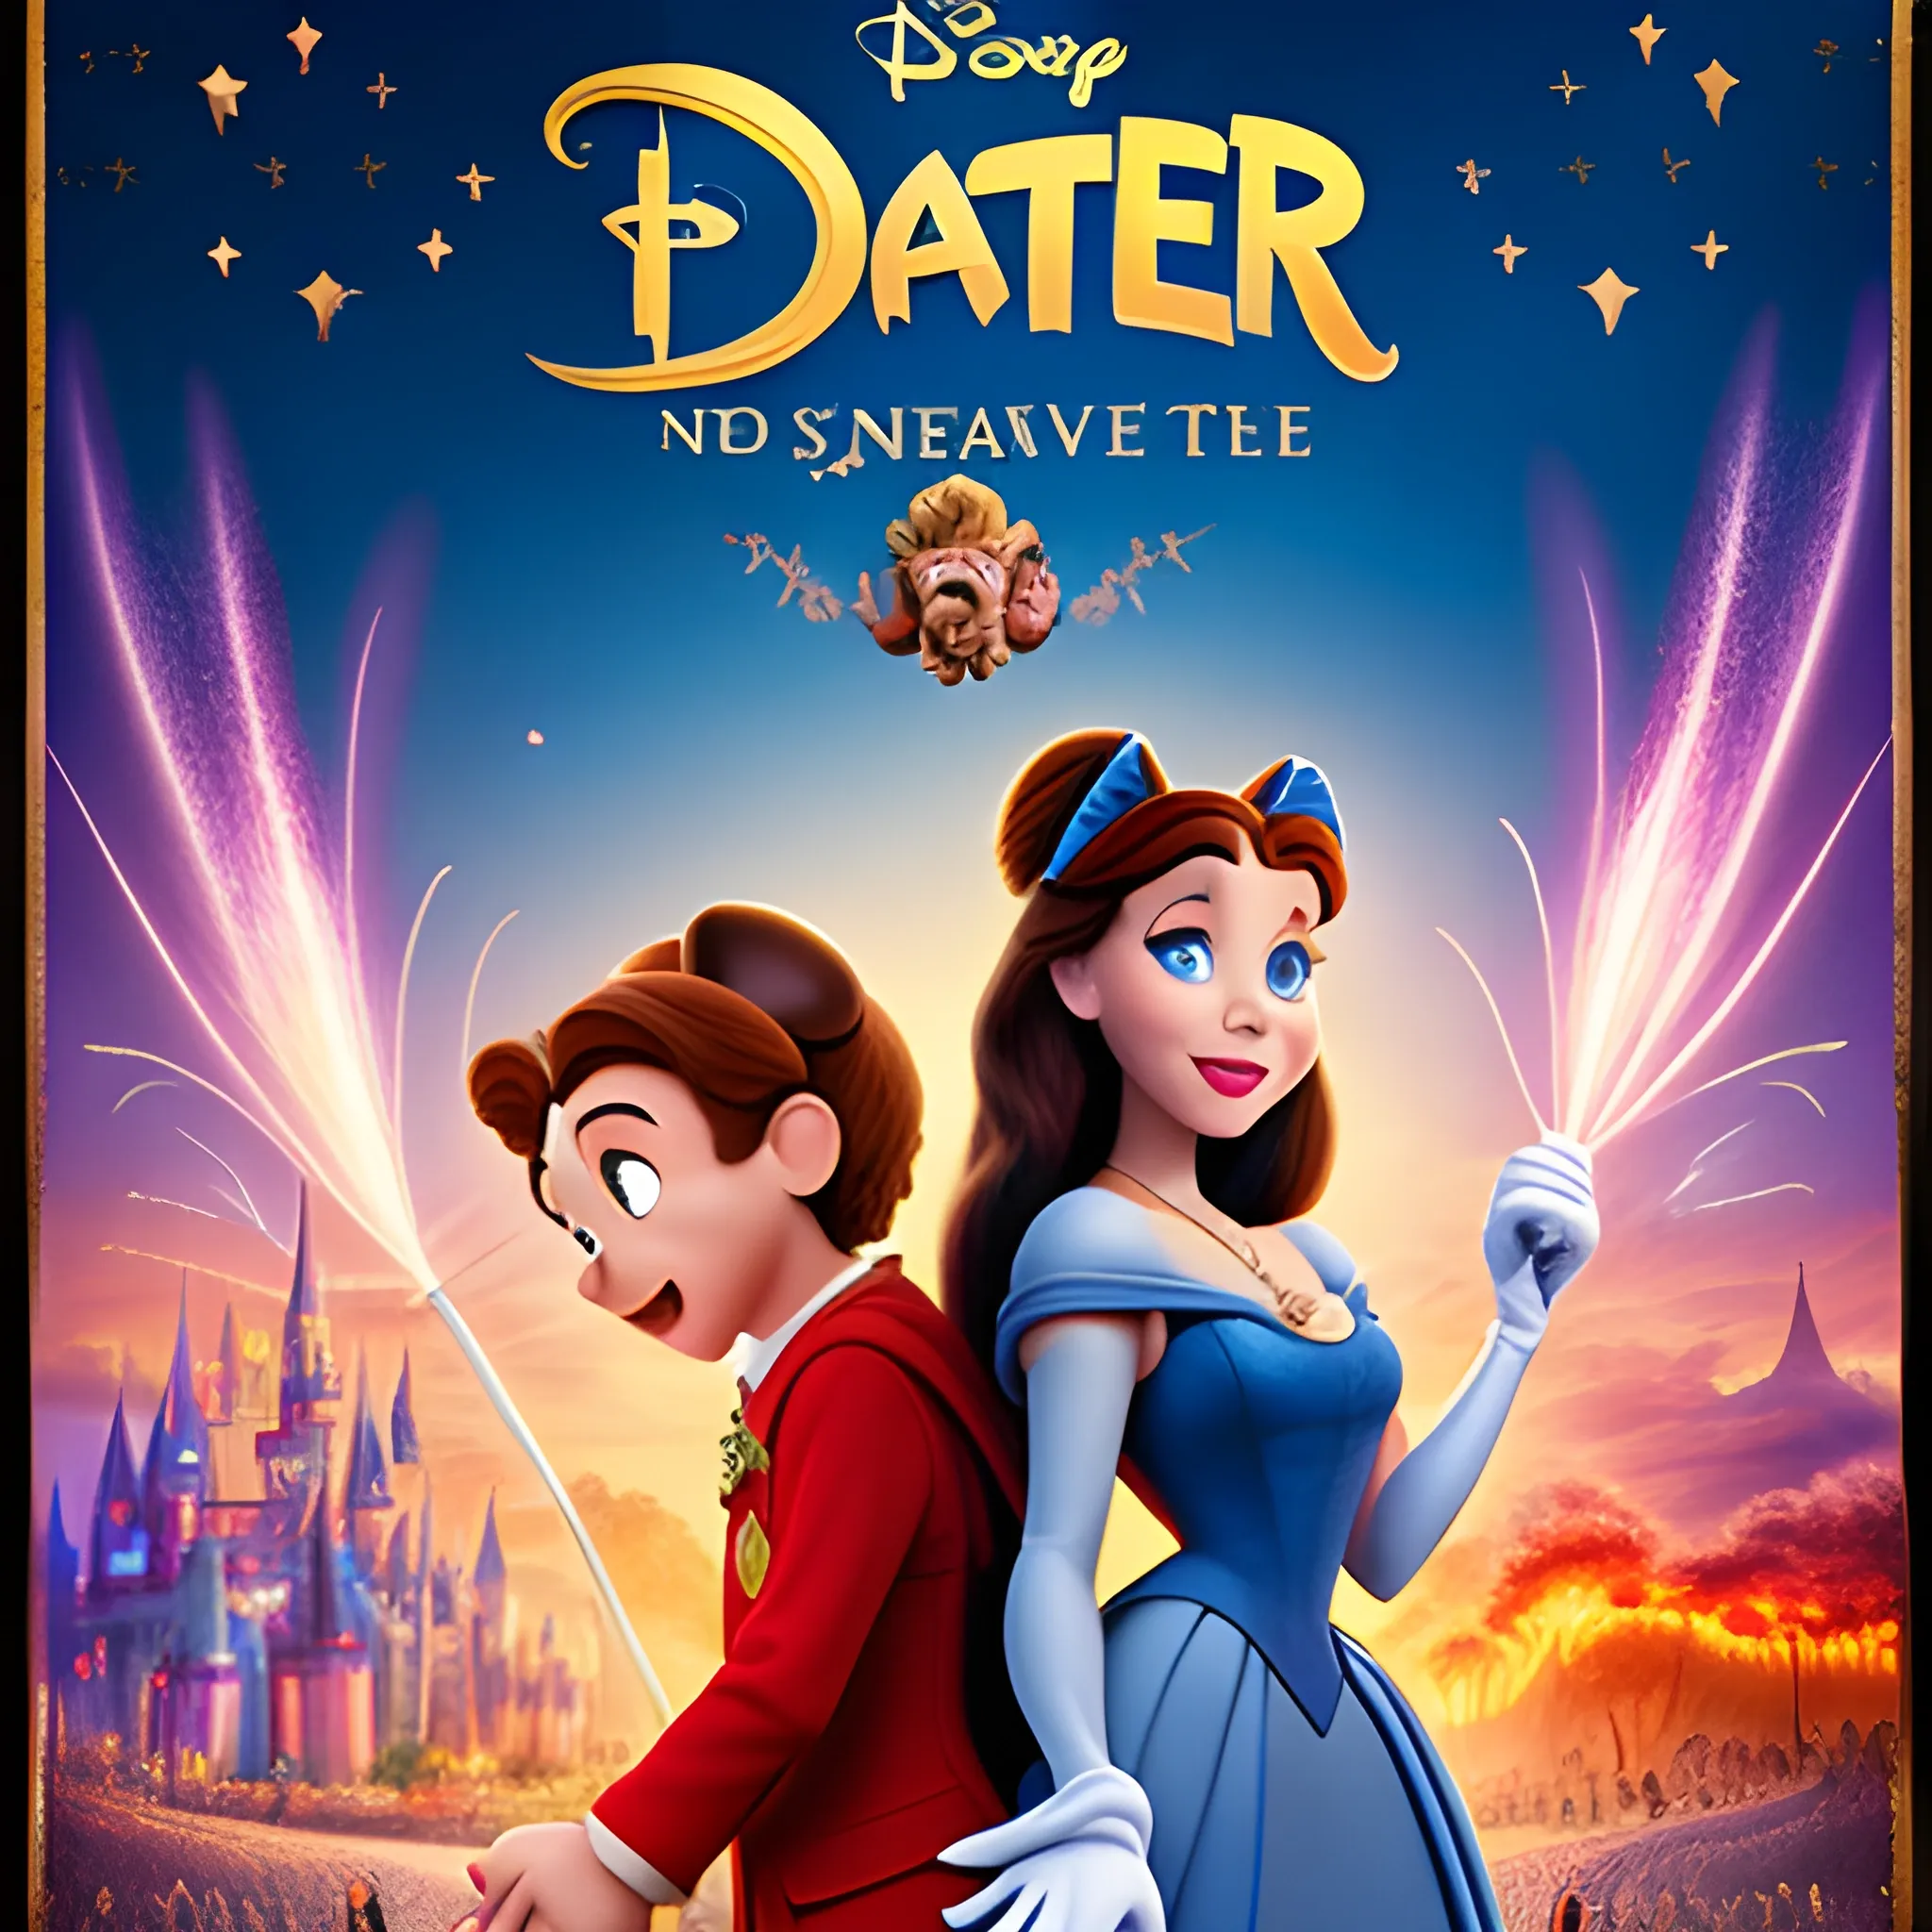 hater Disney movie poster 